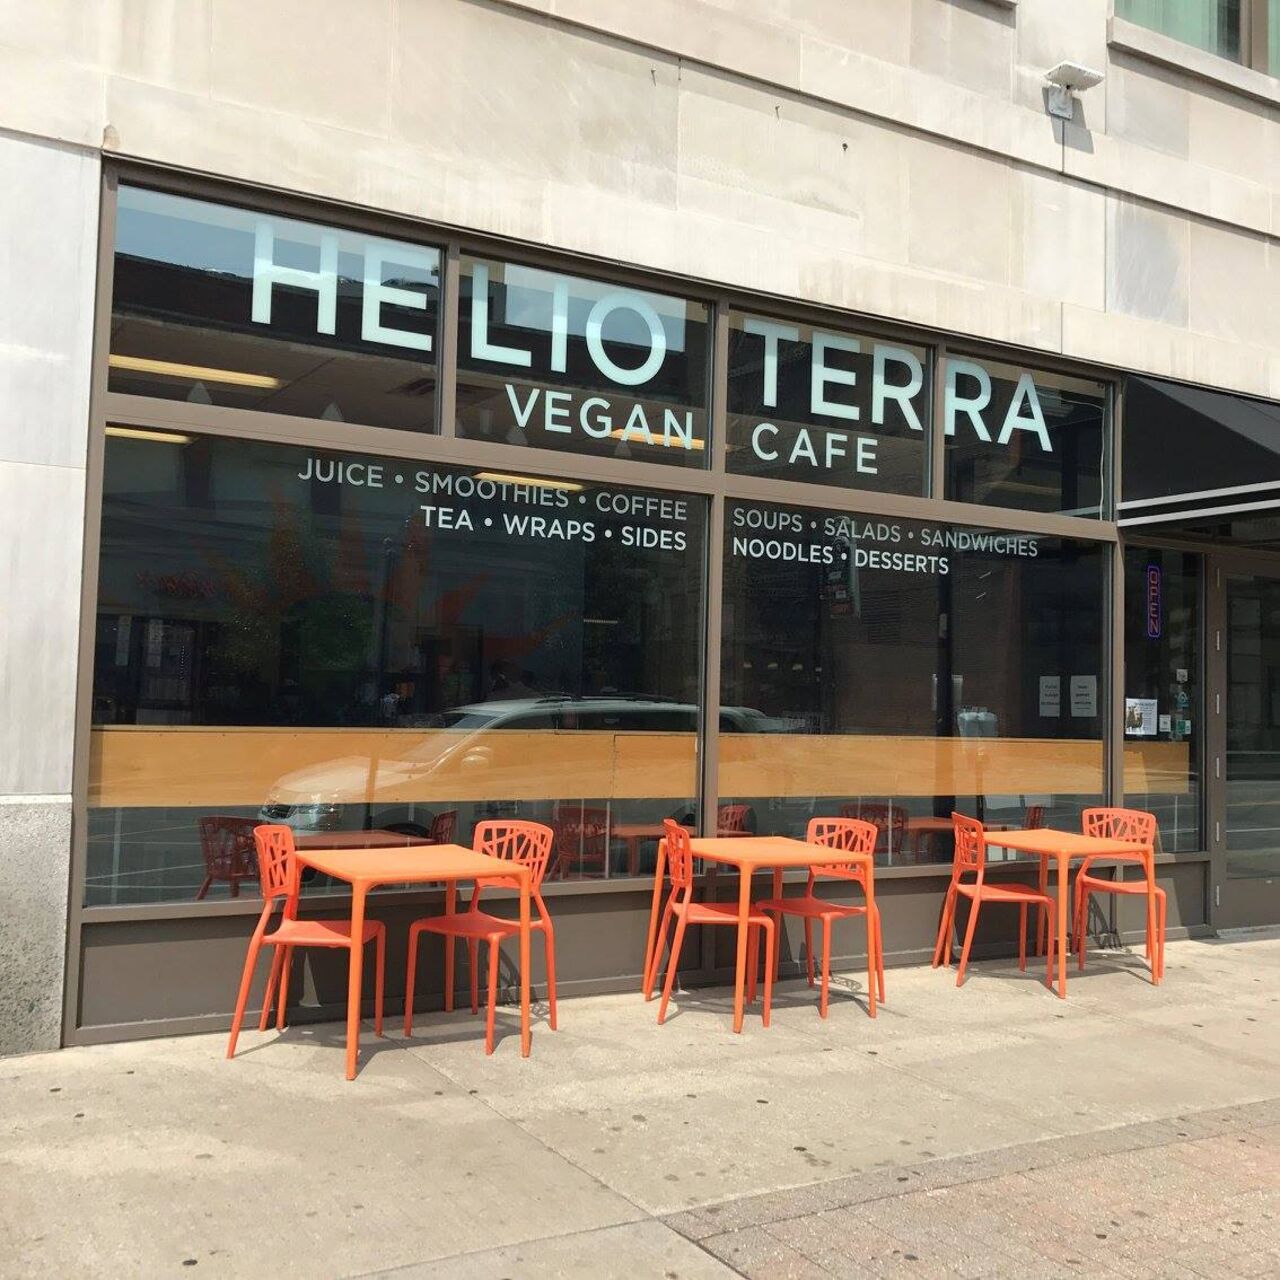 A photo of Helio Terra Vegan Café